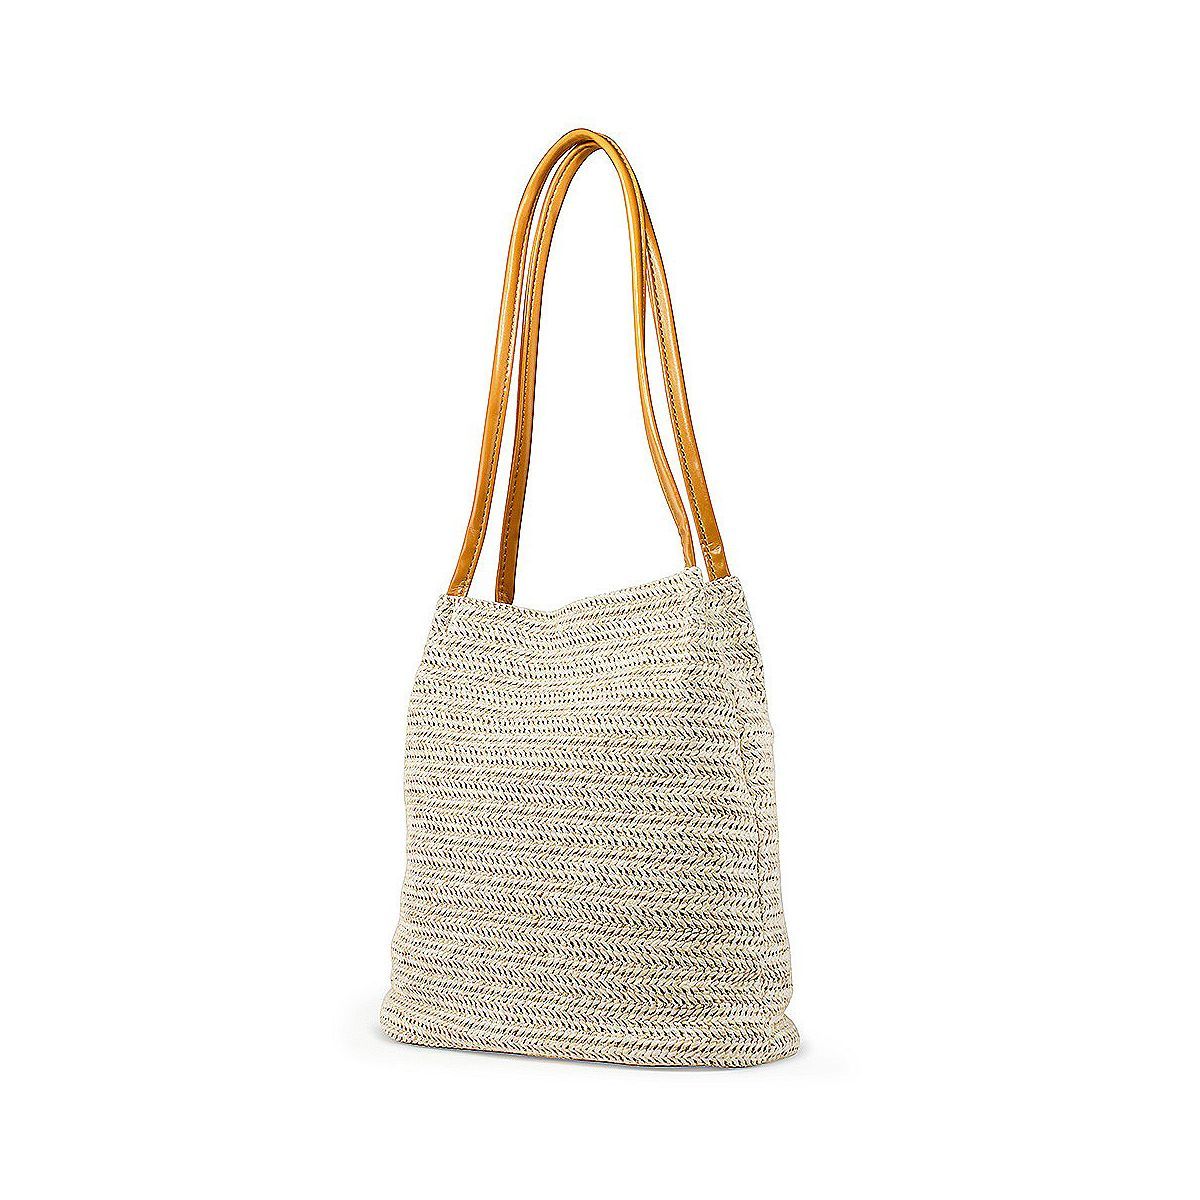 Gearonic Straw Beach Bag tote Shoulder Bag | Target